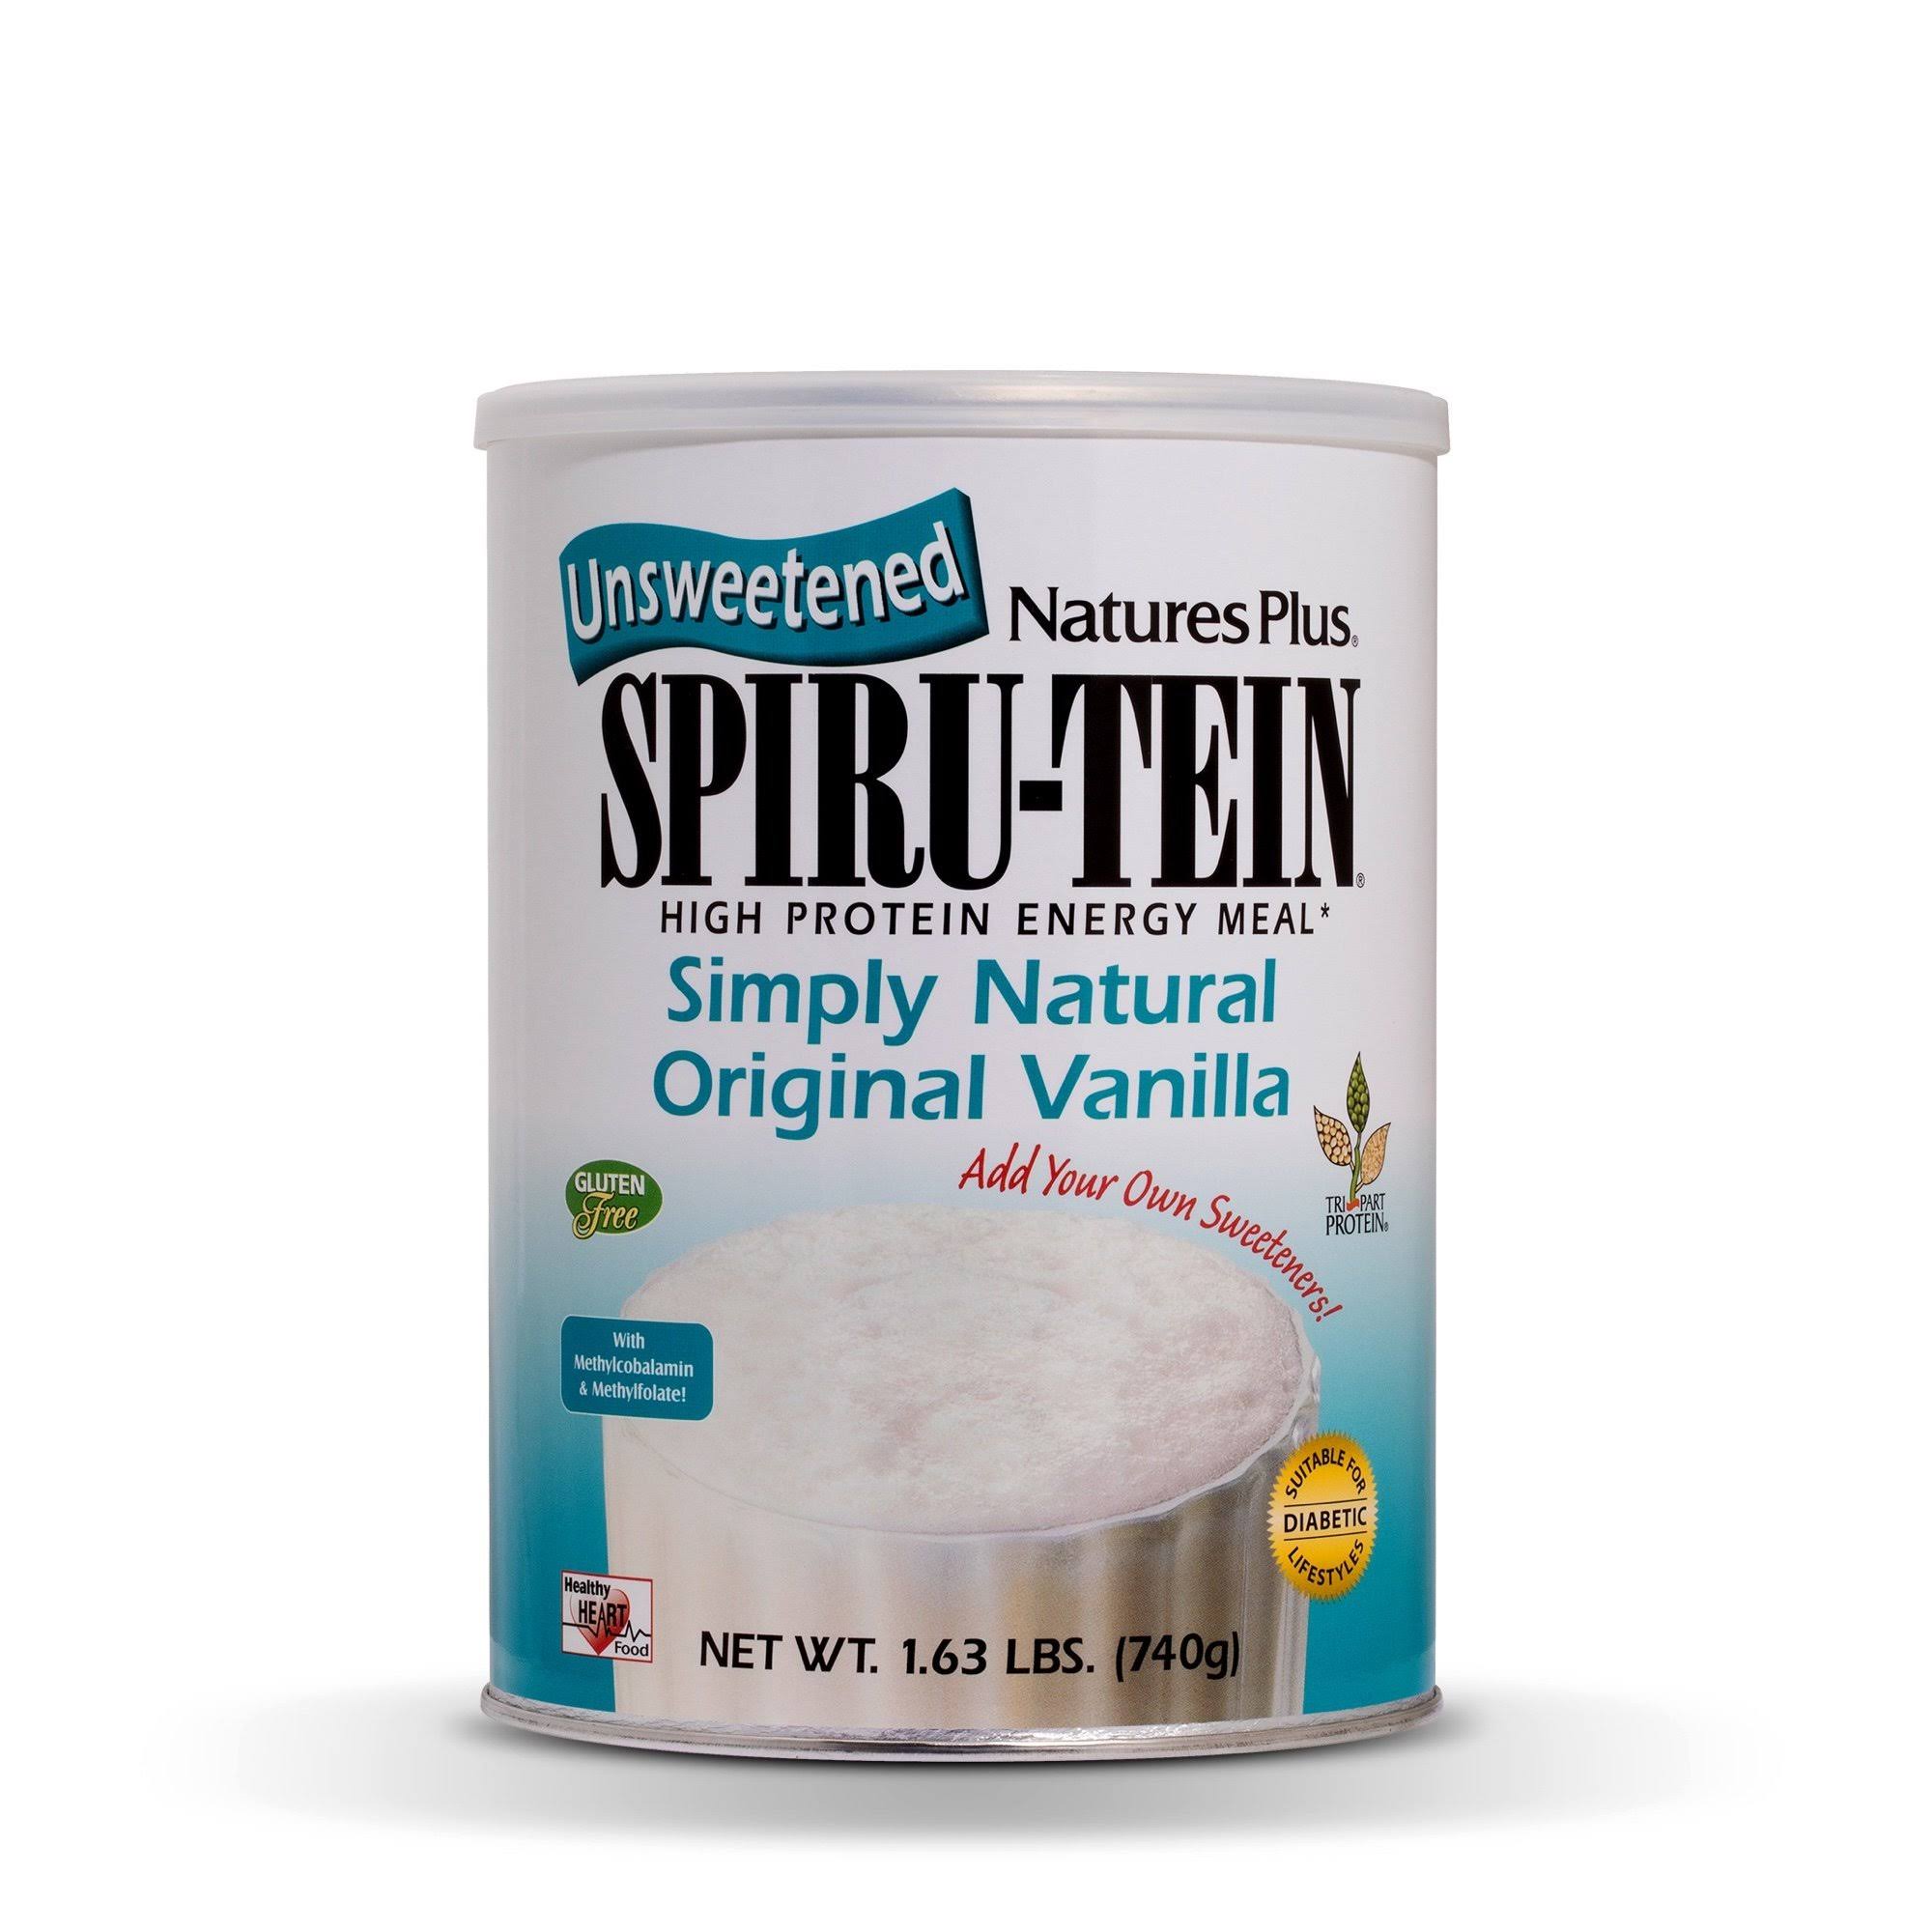 Nature's Plus Spiru-Tein Energy Meal - Vanilla, 740g